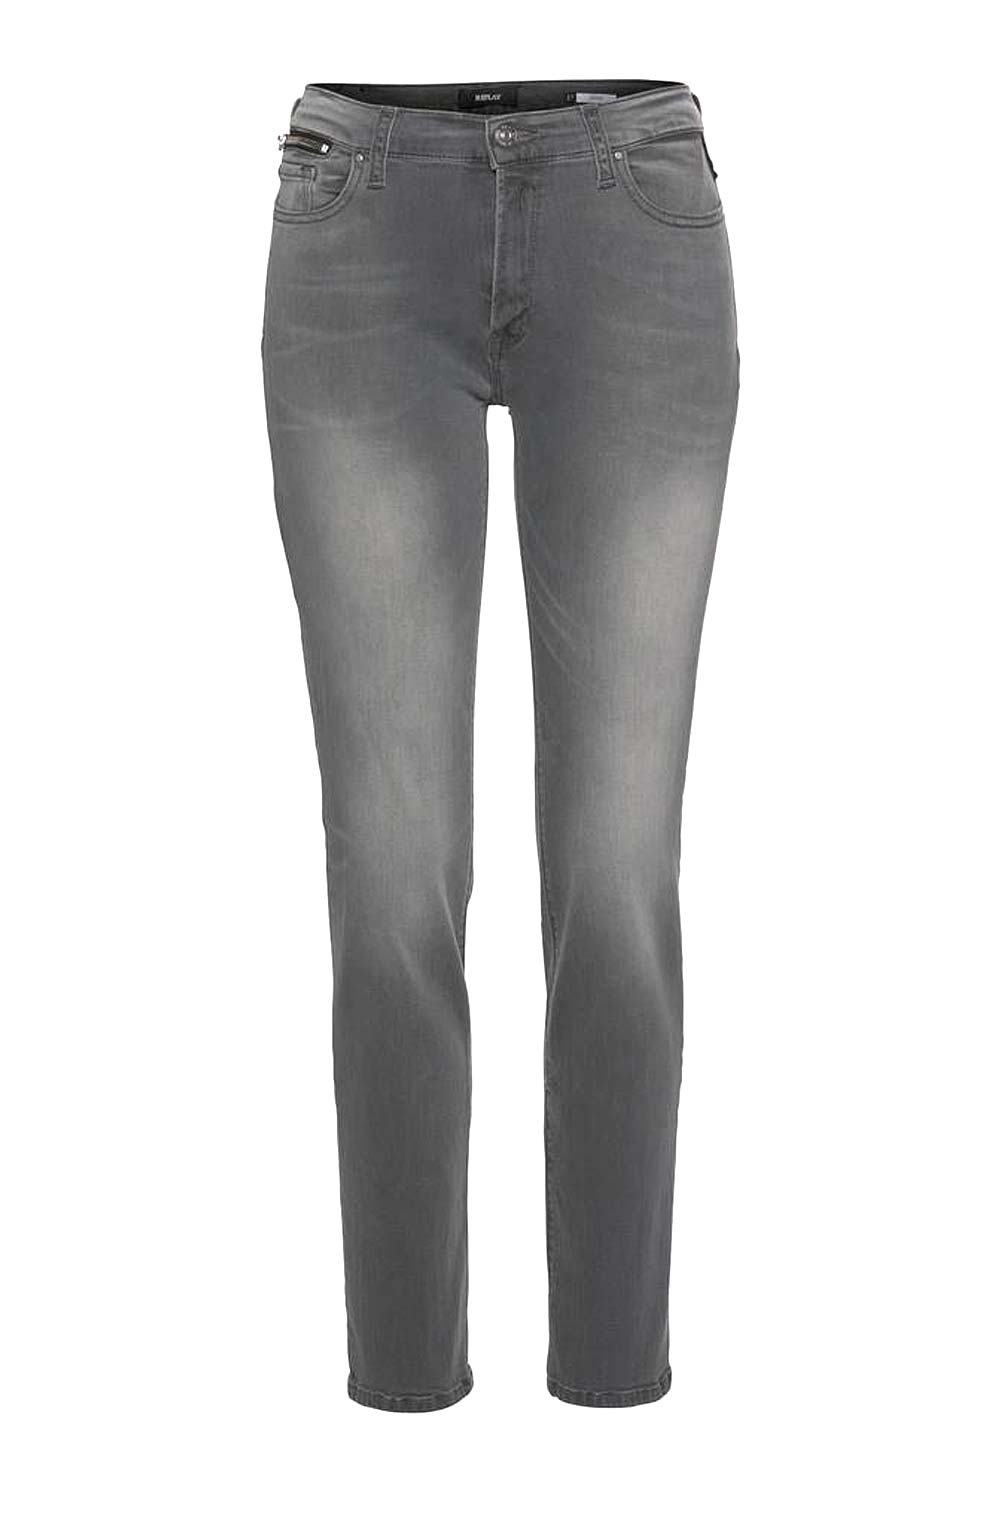 Replay Damen Marken-Jeans &quot;NEW JODEY&quot;, grau, 32 inch